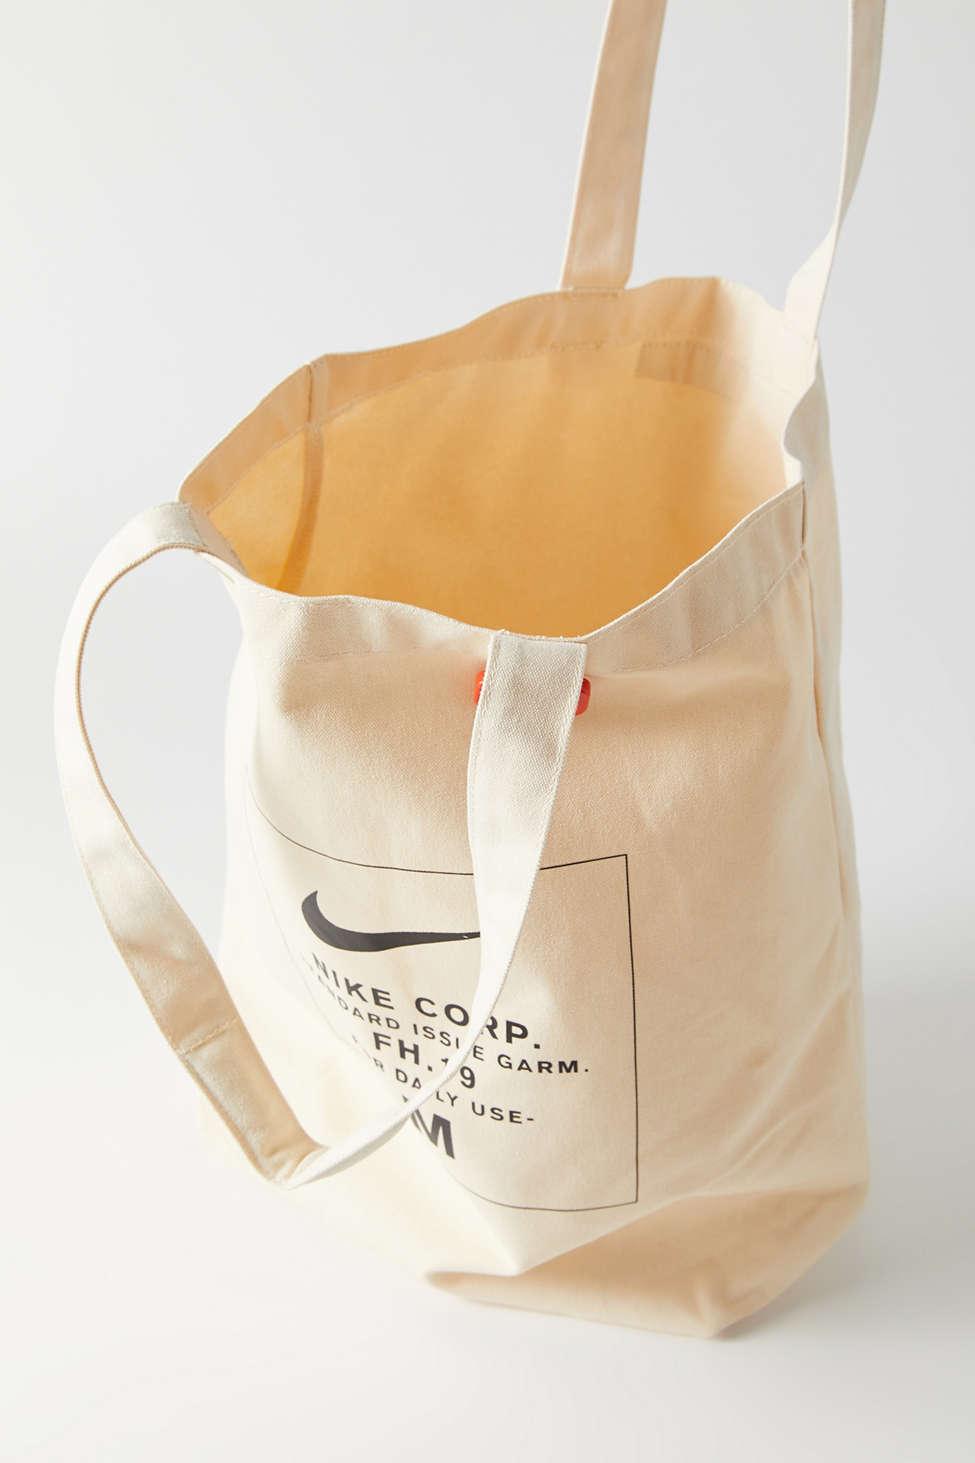 Nike Nike Heritage Tote Bag | Lyst